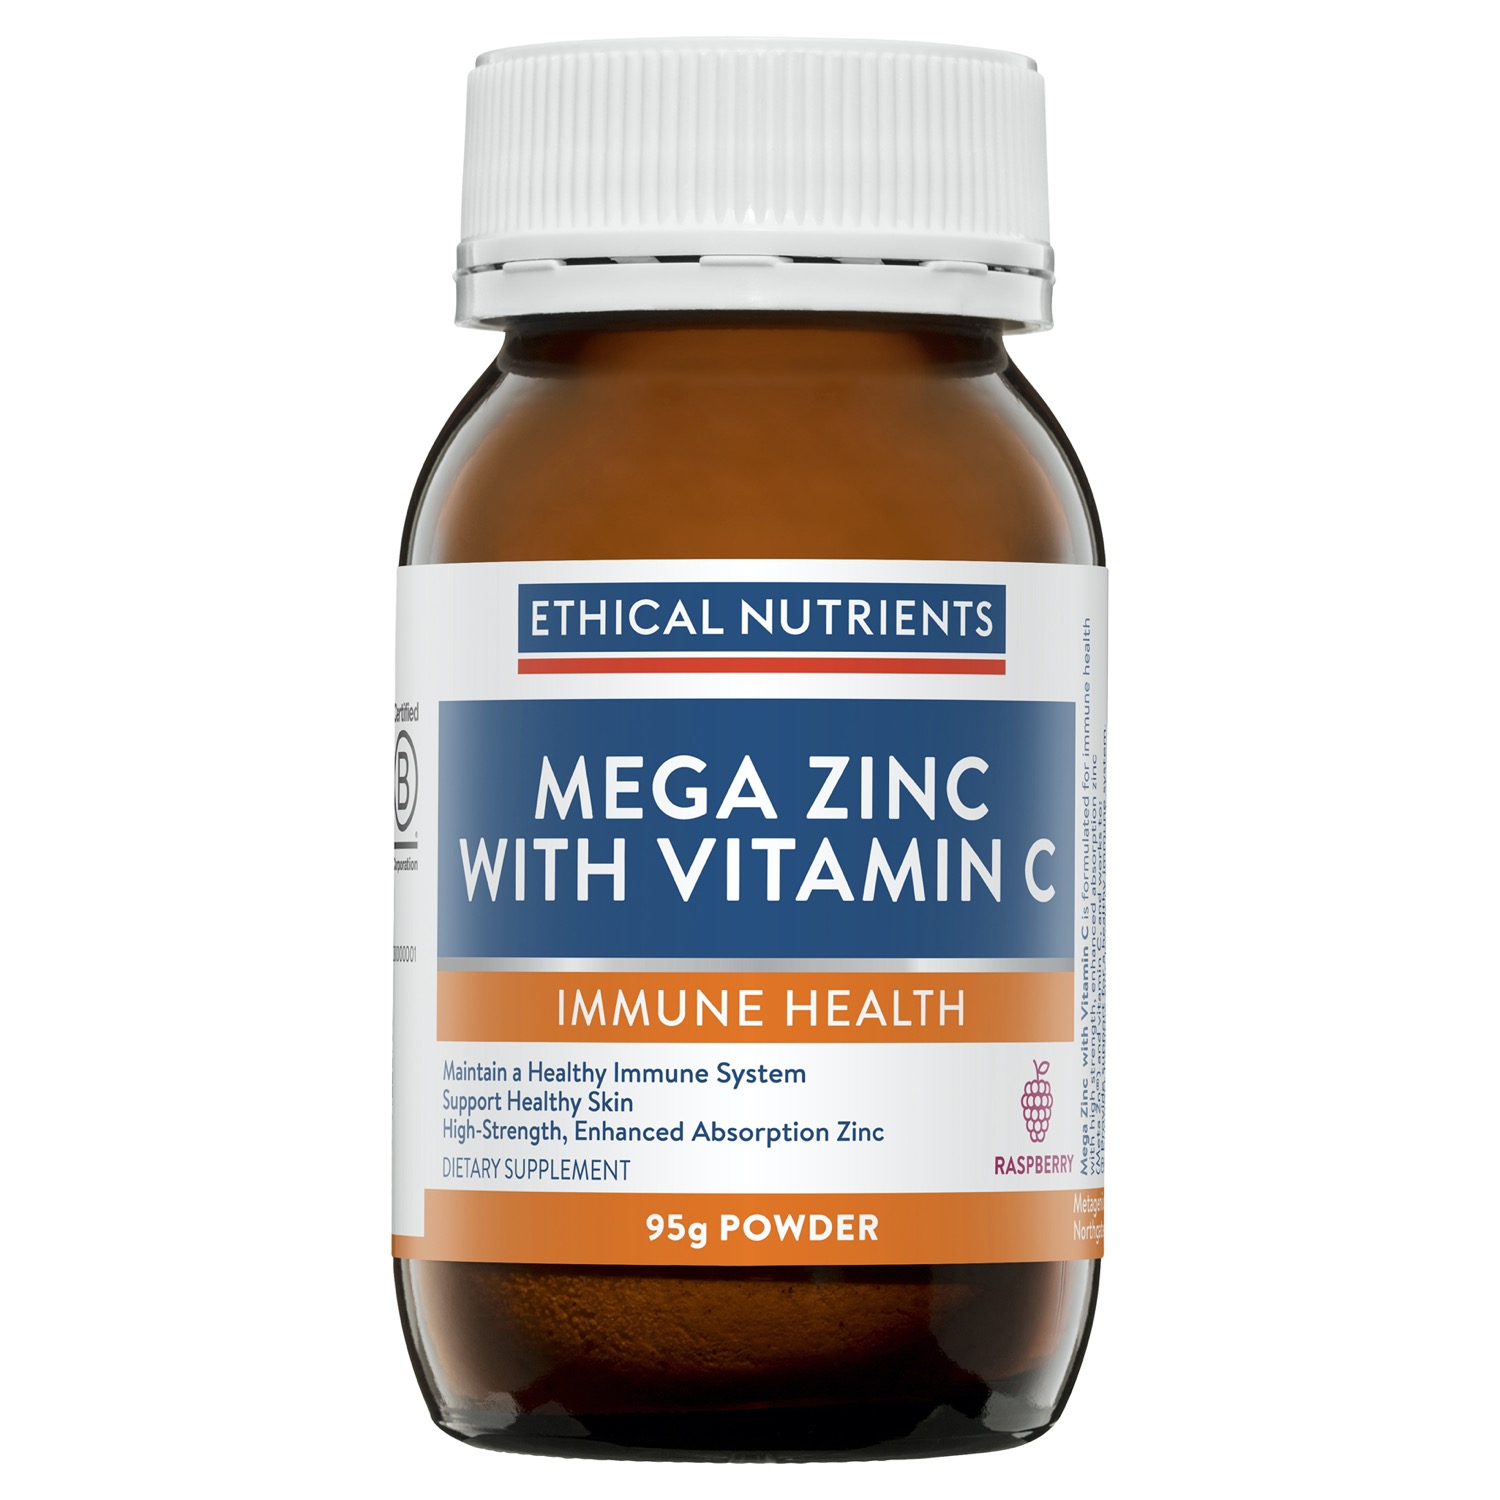 Ethical Nutrients Mega Zinc Powder with Vitamin C Raspberry 95g